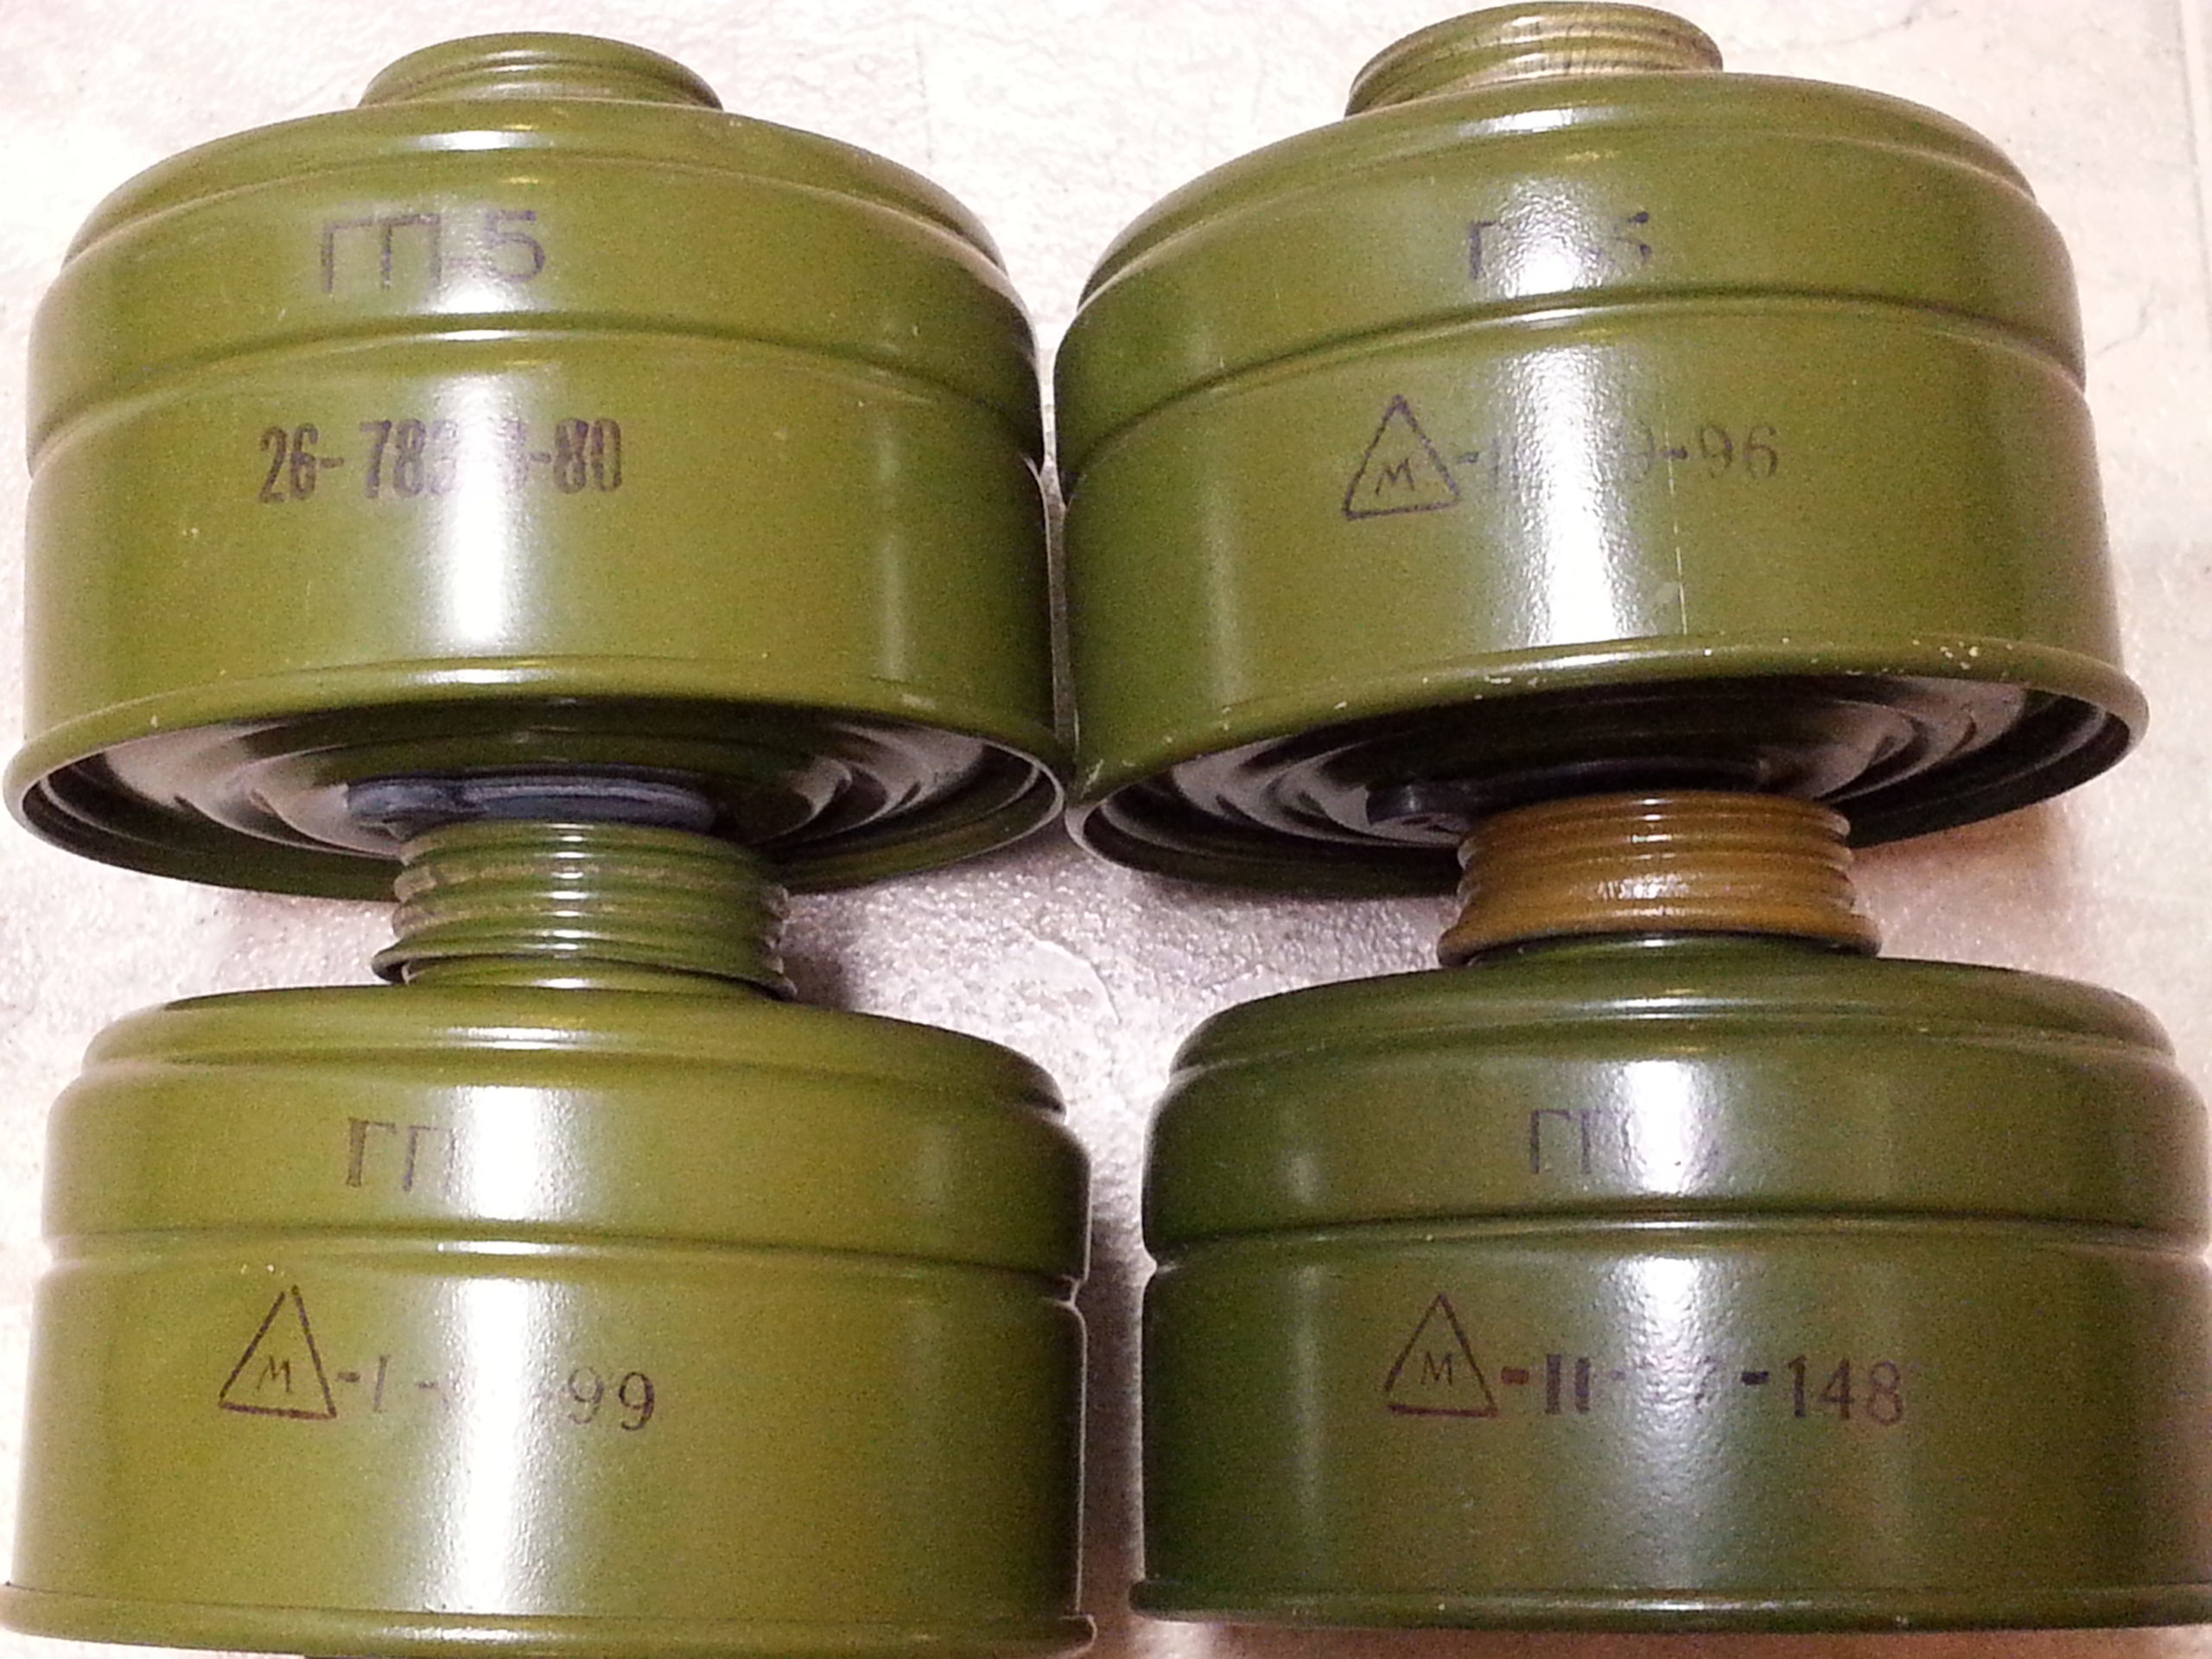 40mm NATO NBC gas mask filter